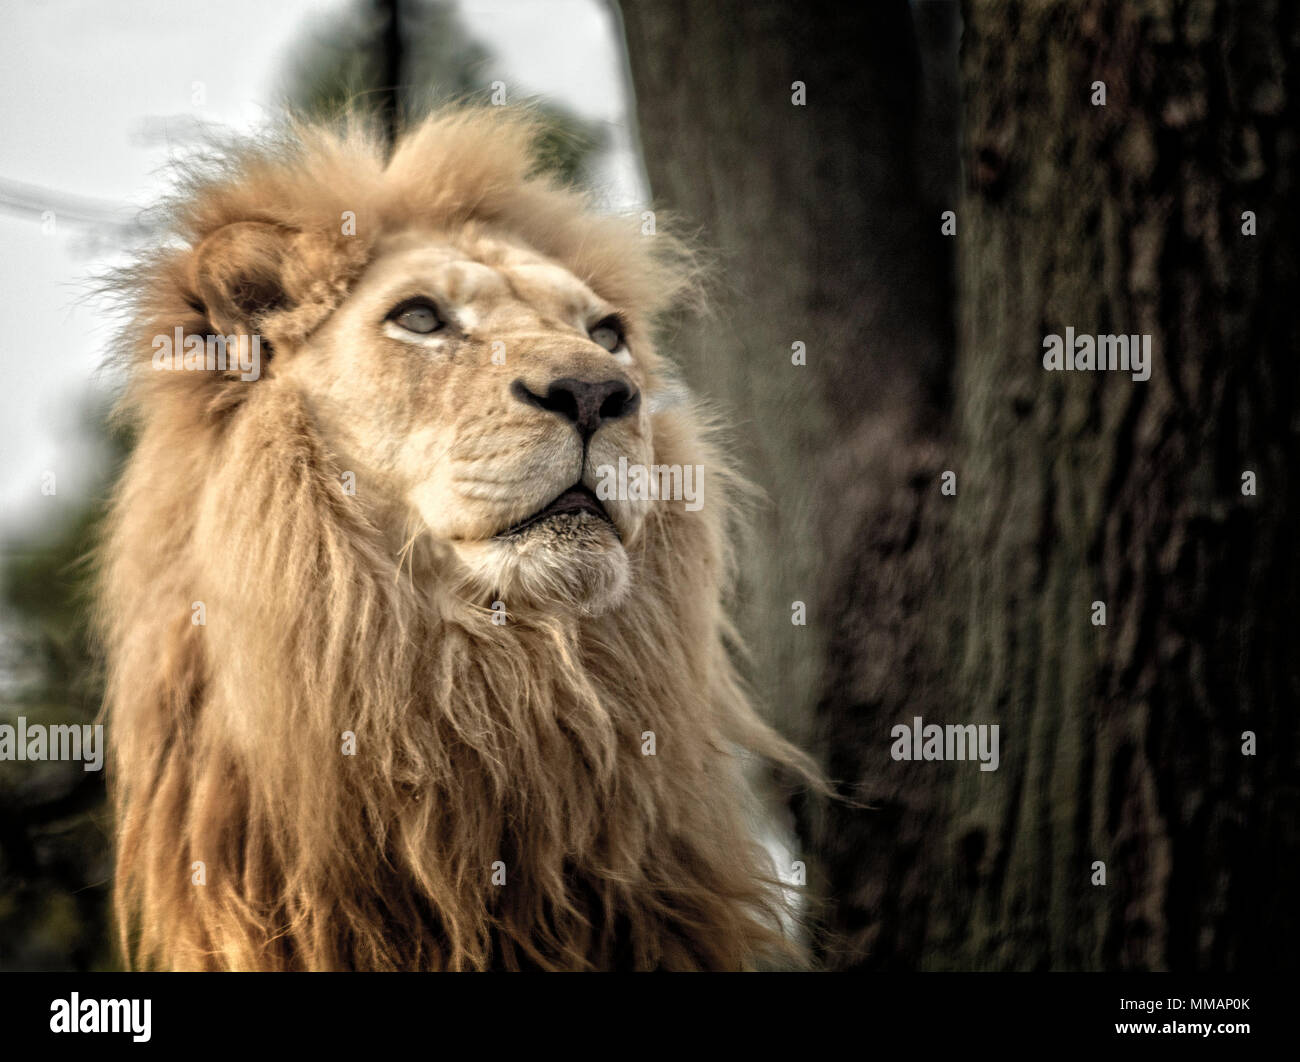 A majestic and proud Lion portrait. Stock Photo